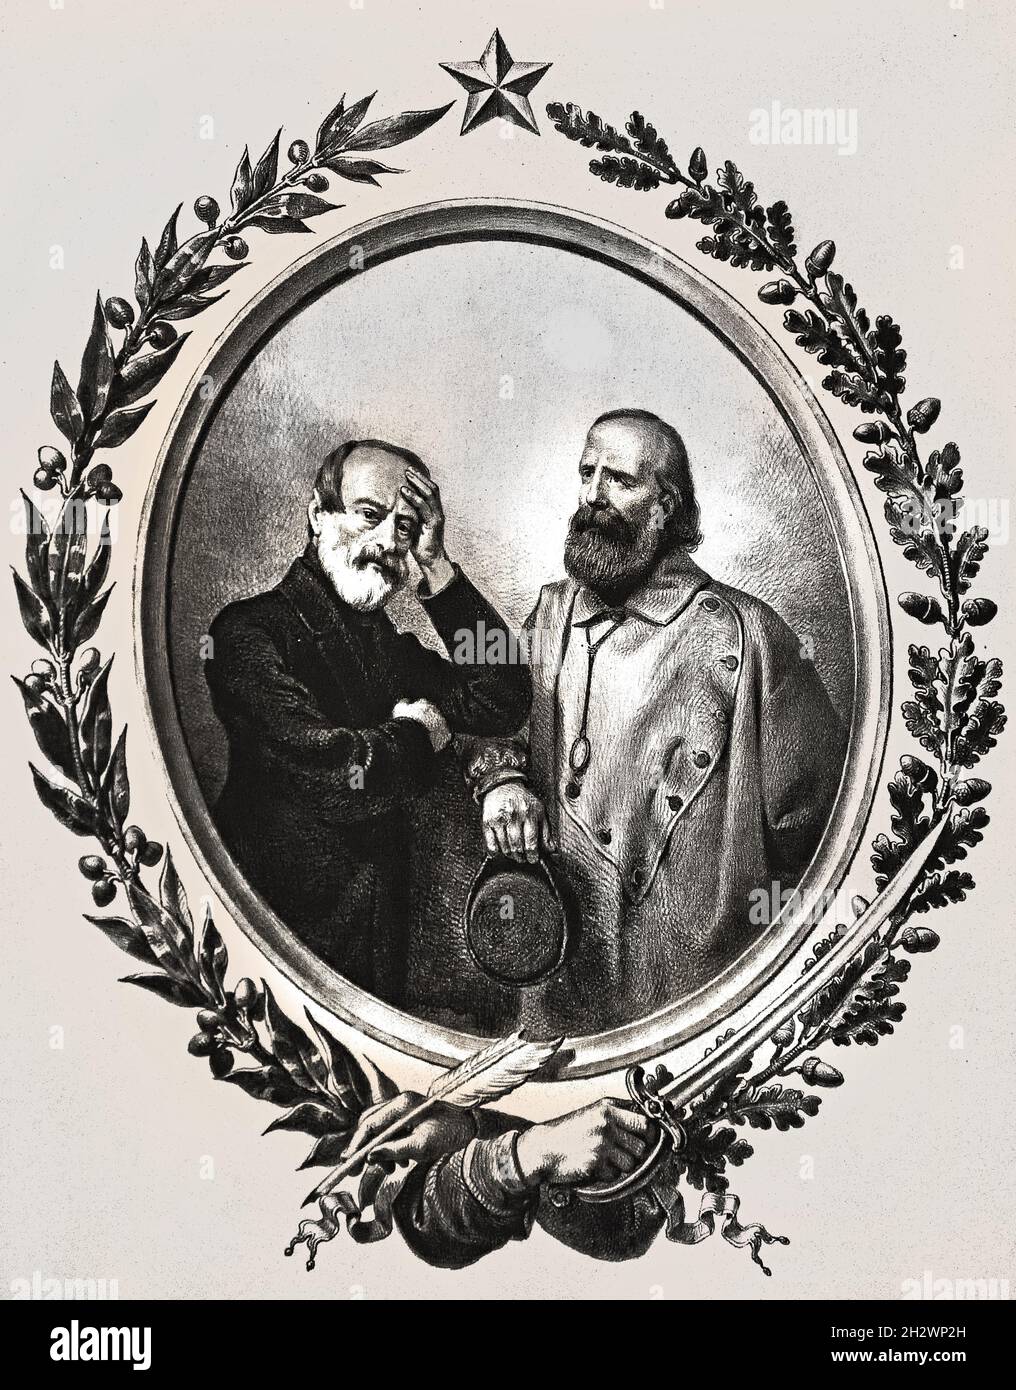 https://c8.alamy.com/comp/2H2WP2H/mazzini-and-garibaldi-as-symbols-of-thought-and-of-action-mazzini-and-garibaldi-united-under-the-motto-mazzinian-third-fourth-19th-century-mazzinian-giuseppe-mazzini-1805-1872-italian-politician-journalist-activist-garibaldi-giuseppe-maria-garibaldi-1807-1882-italian-general-patriot-revolutionary-republican-italy-unification-and-the-creation-of-the-kingdom-of-italy-2H2WP2H.jpg